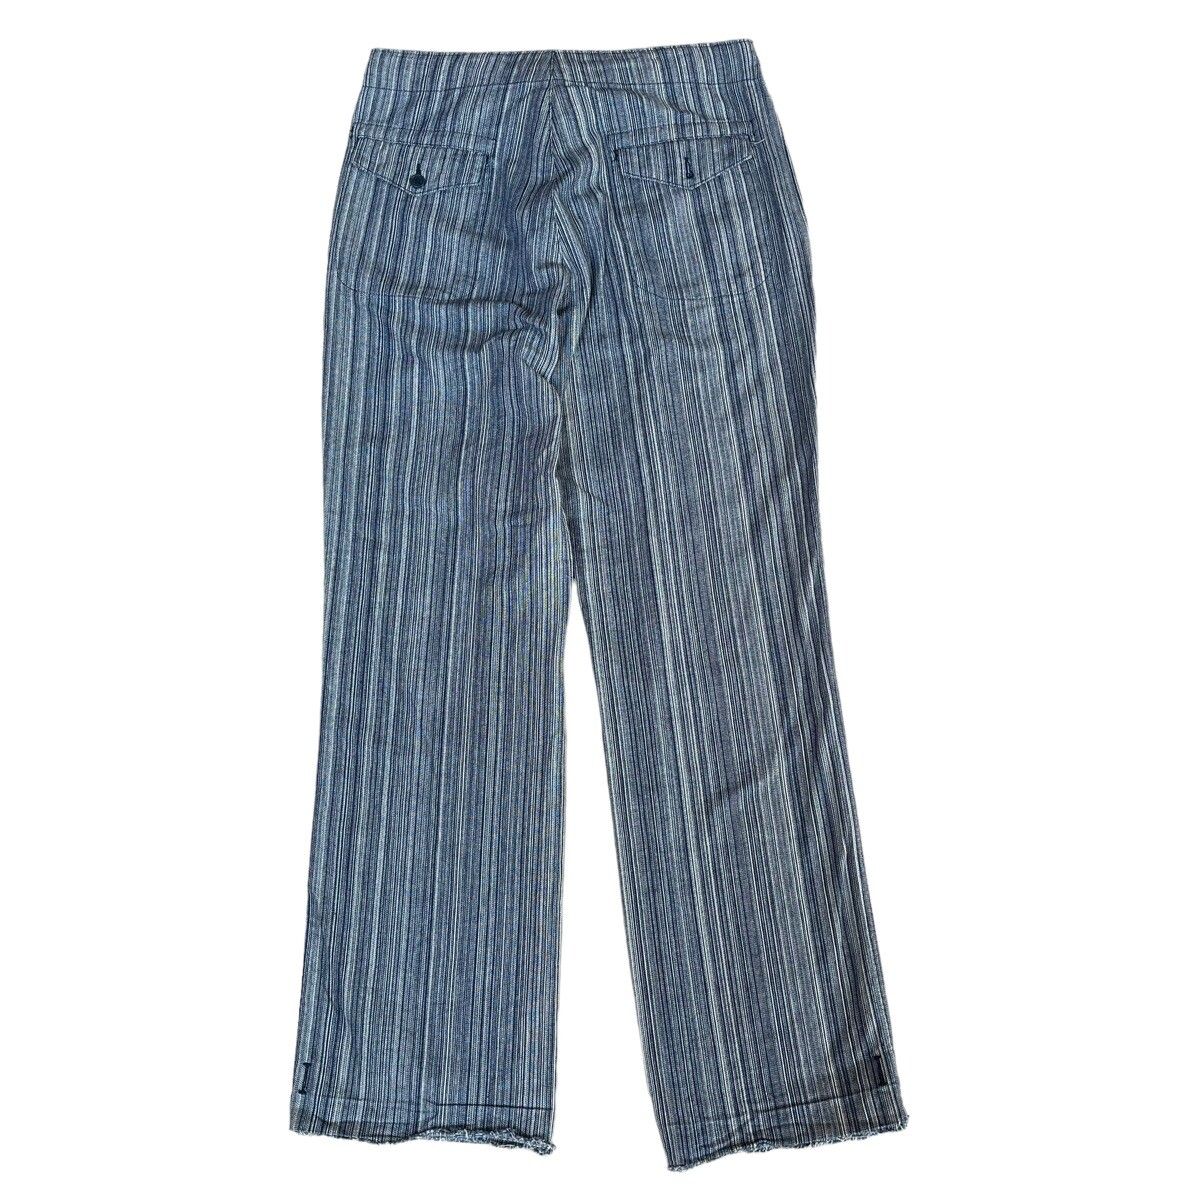 Beams Japan Inspired Kapital Style Pants Size 31 - 7